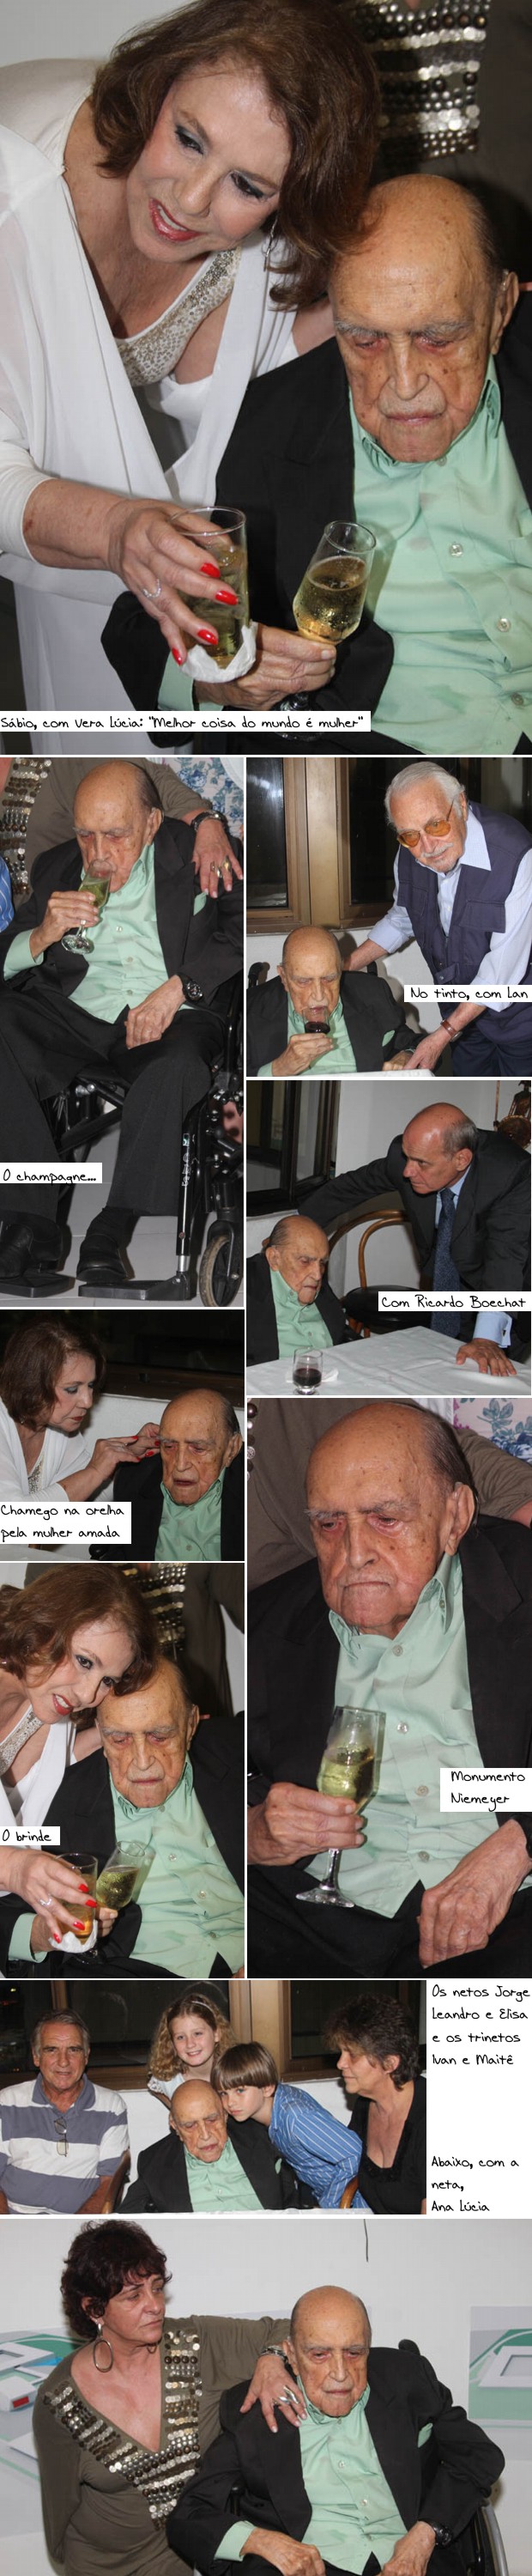 Oscar 104 Oscar Niemeyer 104 anos